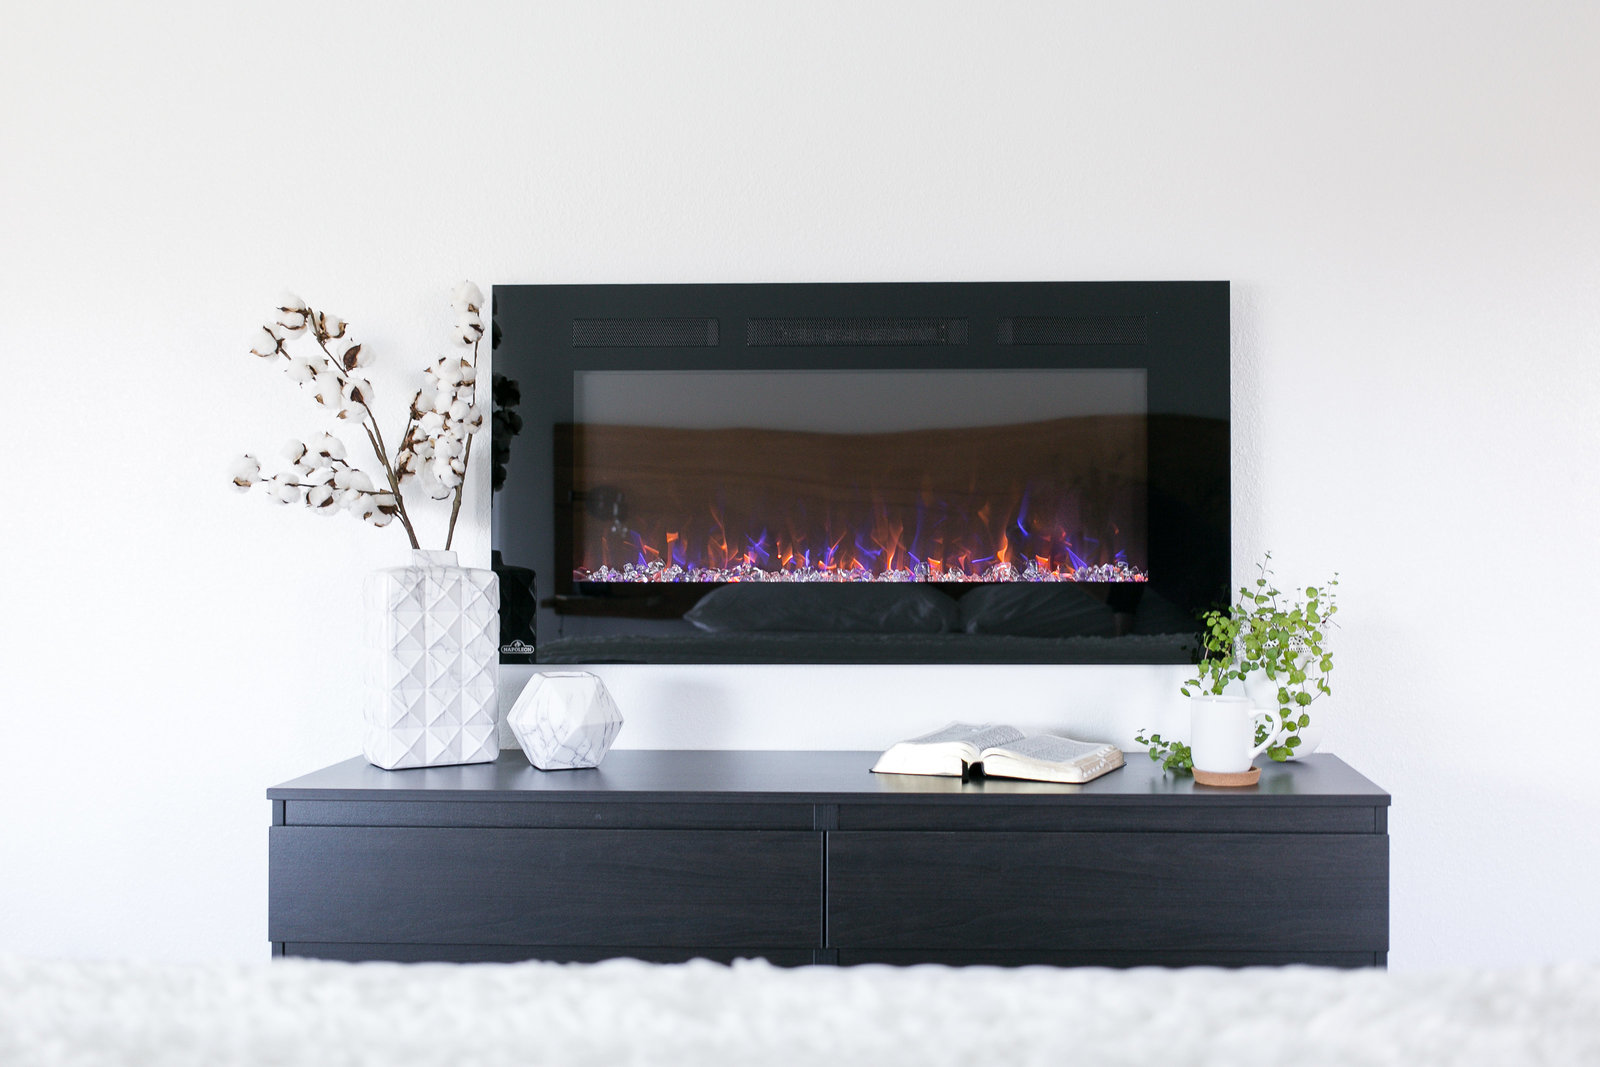 Modern BnB Master Bedroom design with hanging fireplace, black dresser for storage and minimalistic decor.